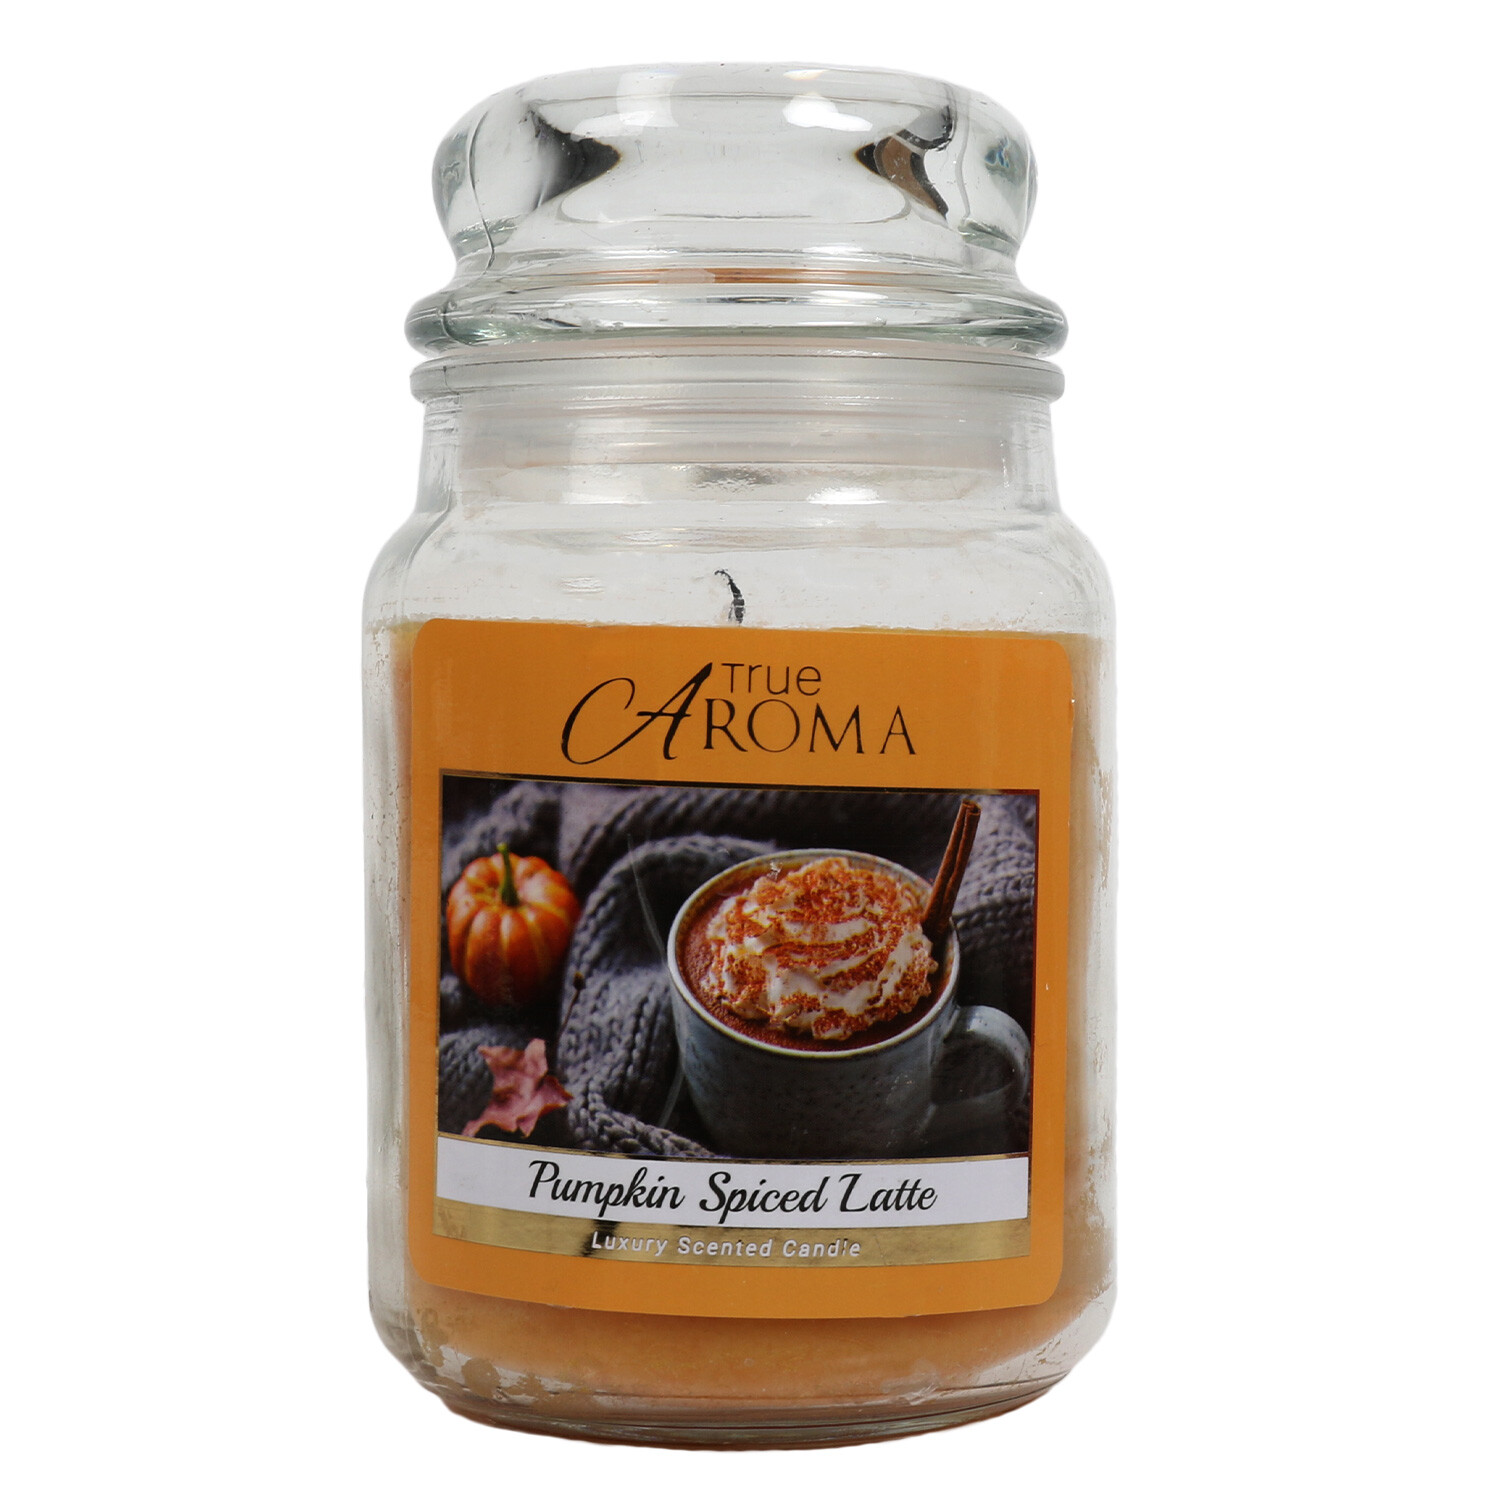 Pumpkin Spiced Latte Large Mason Jar Candle - Orange Image